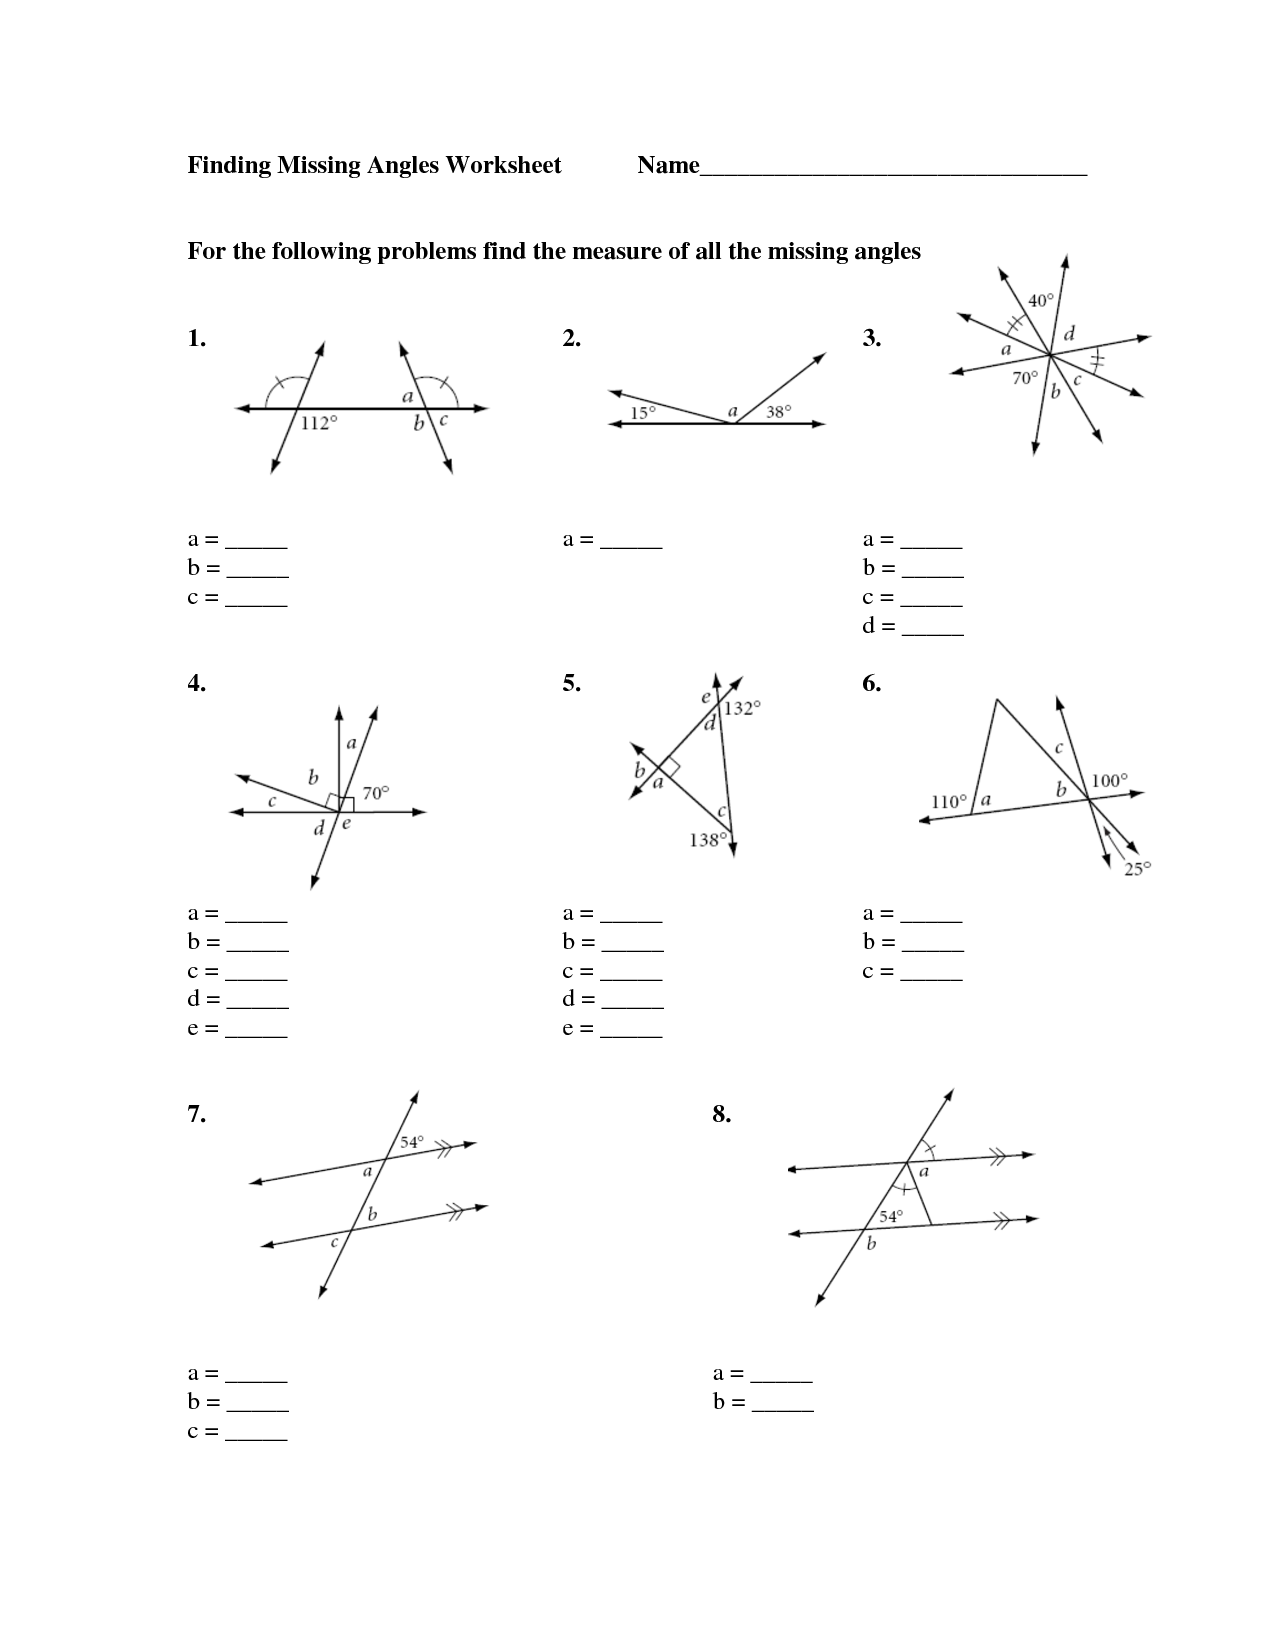 finding-missing-angles-worksheet-answers-pdf-naturalard